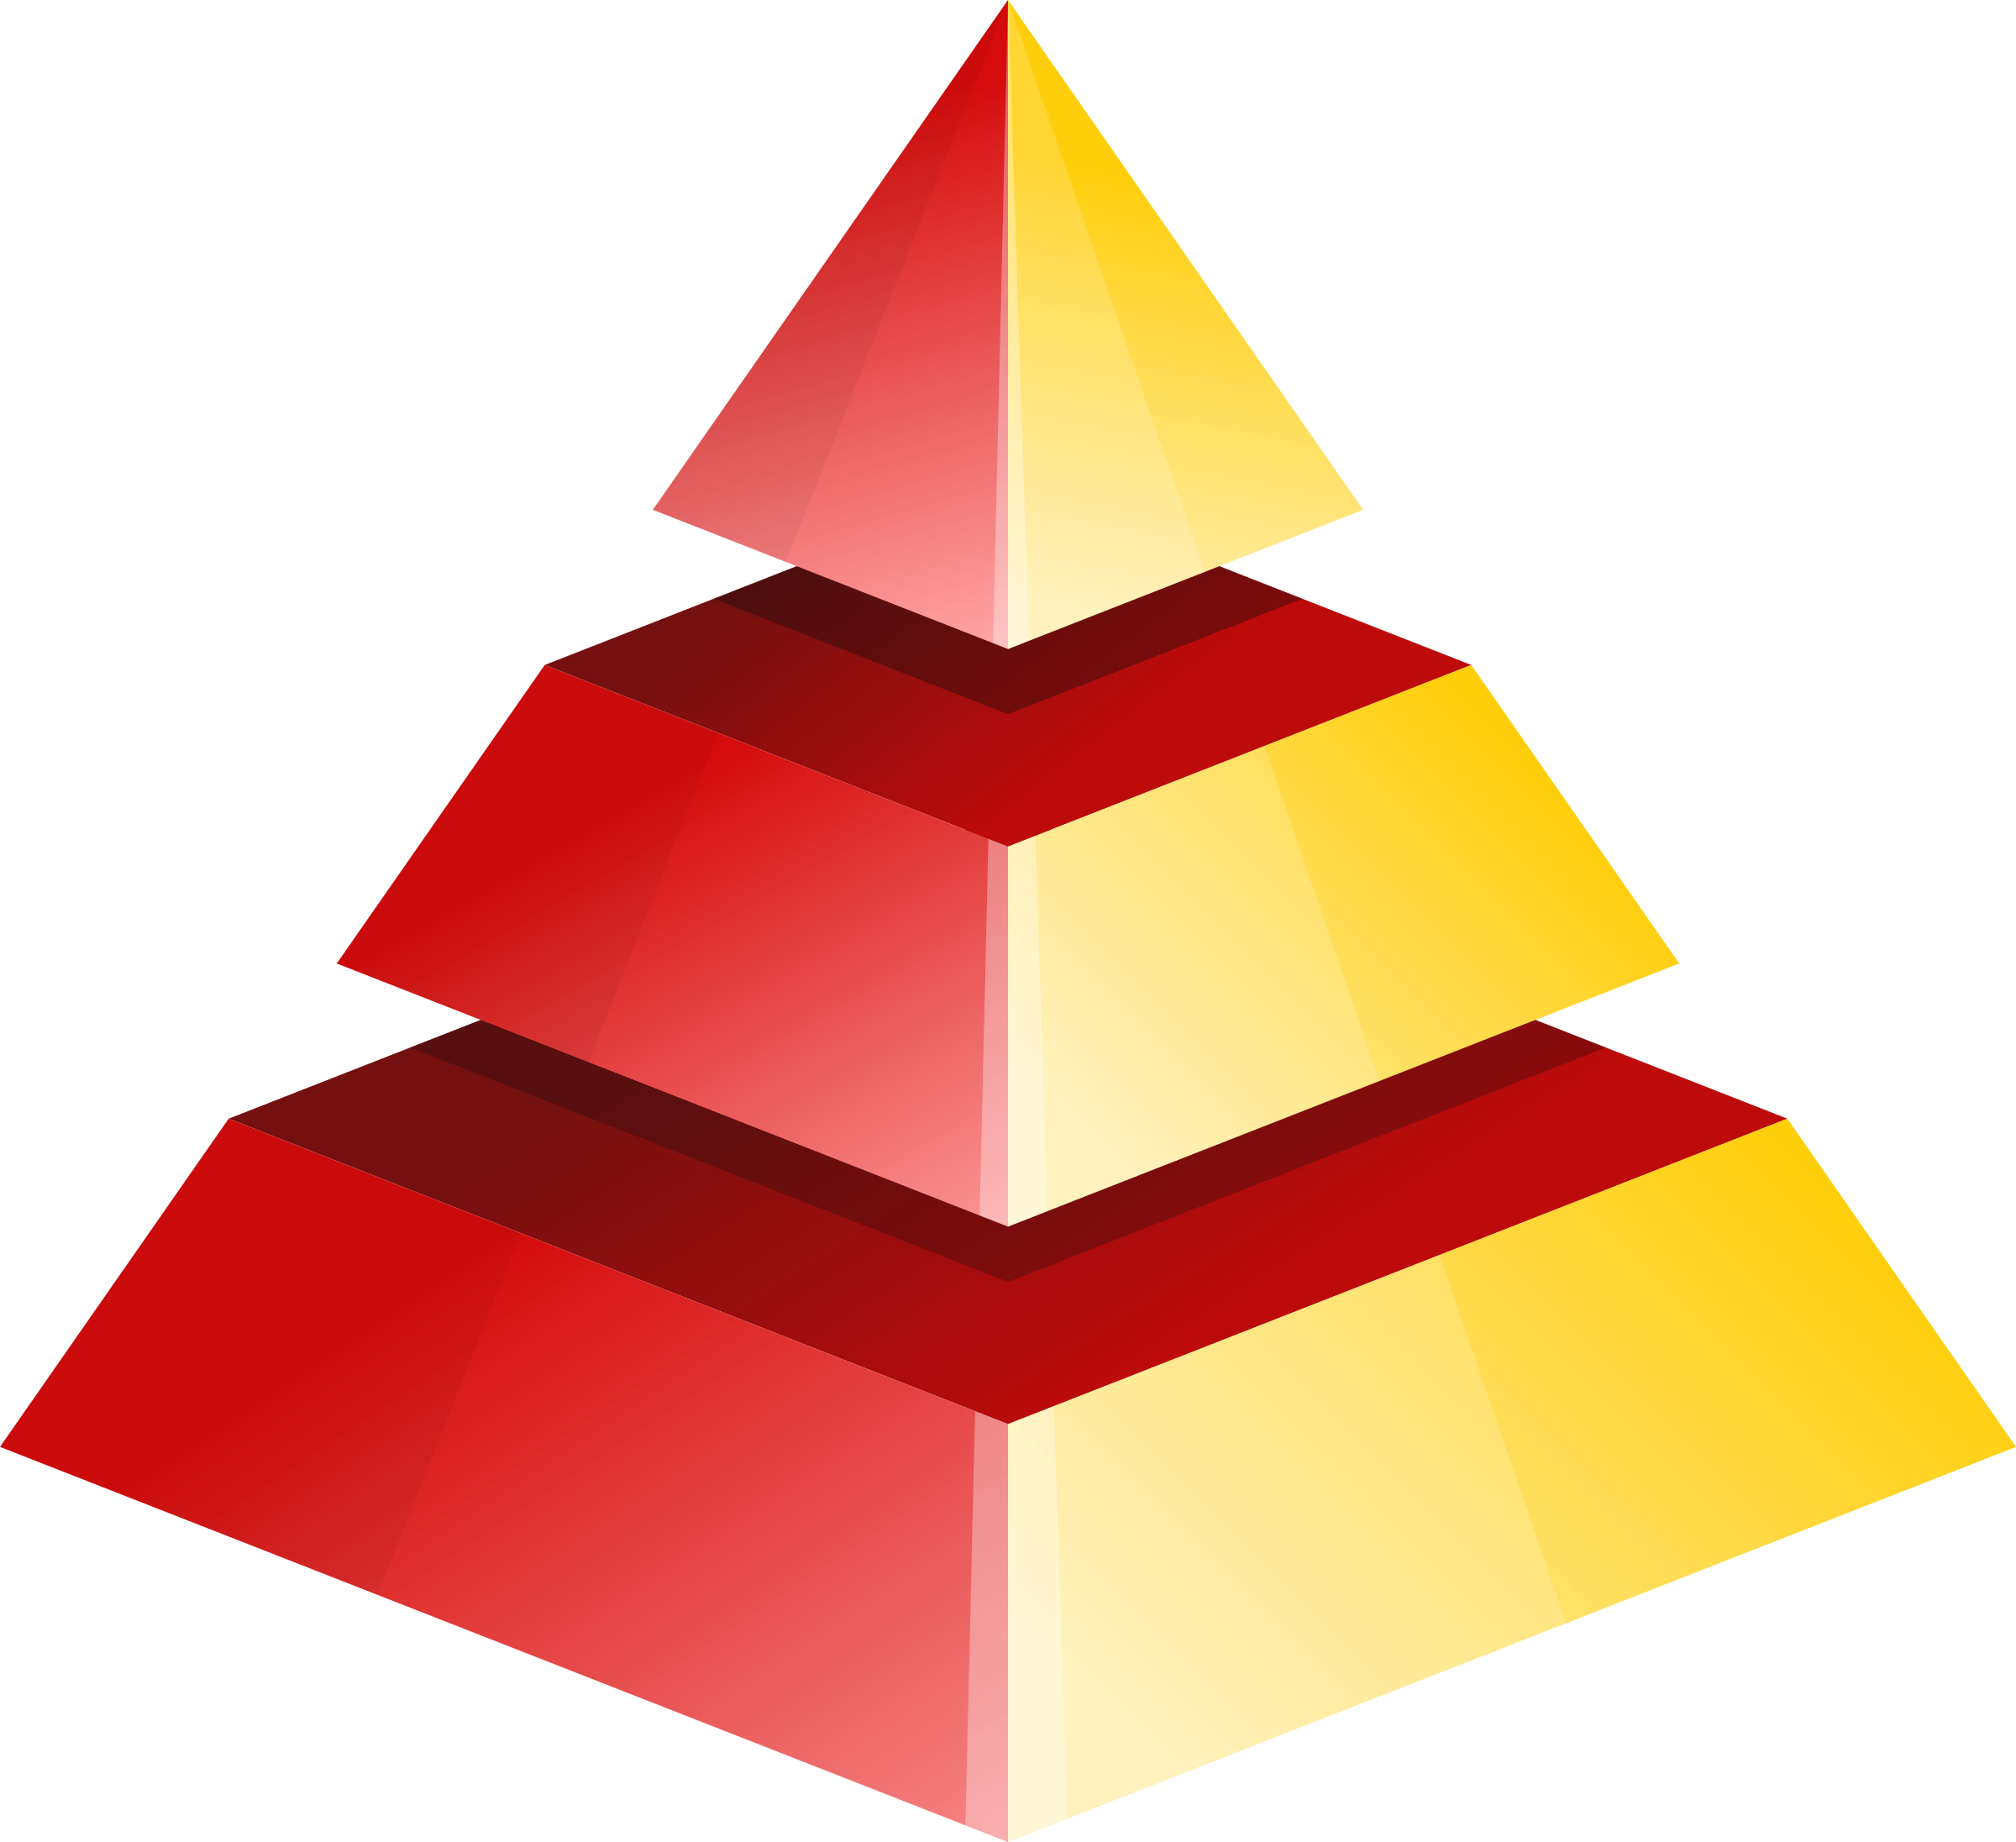 Big Image (Png) - Pyramid, Transparent background PNG HD thumbnail